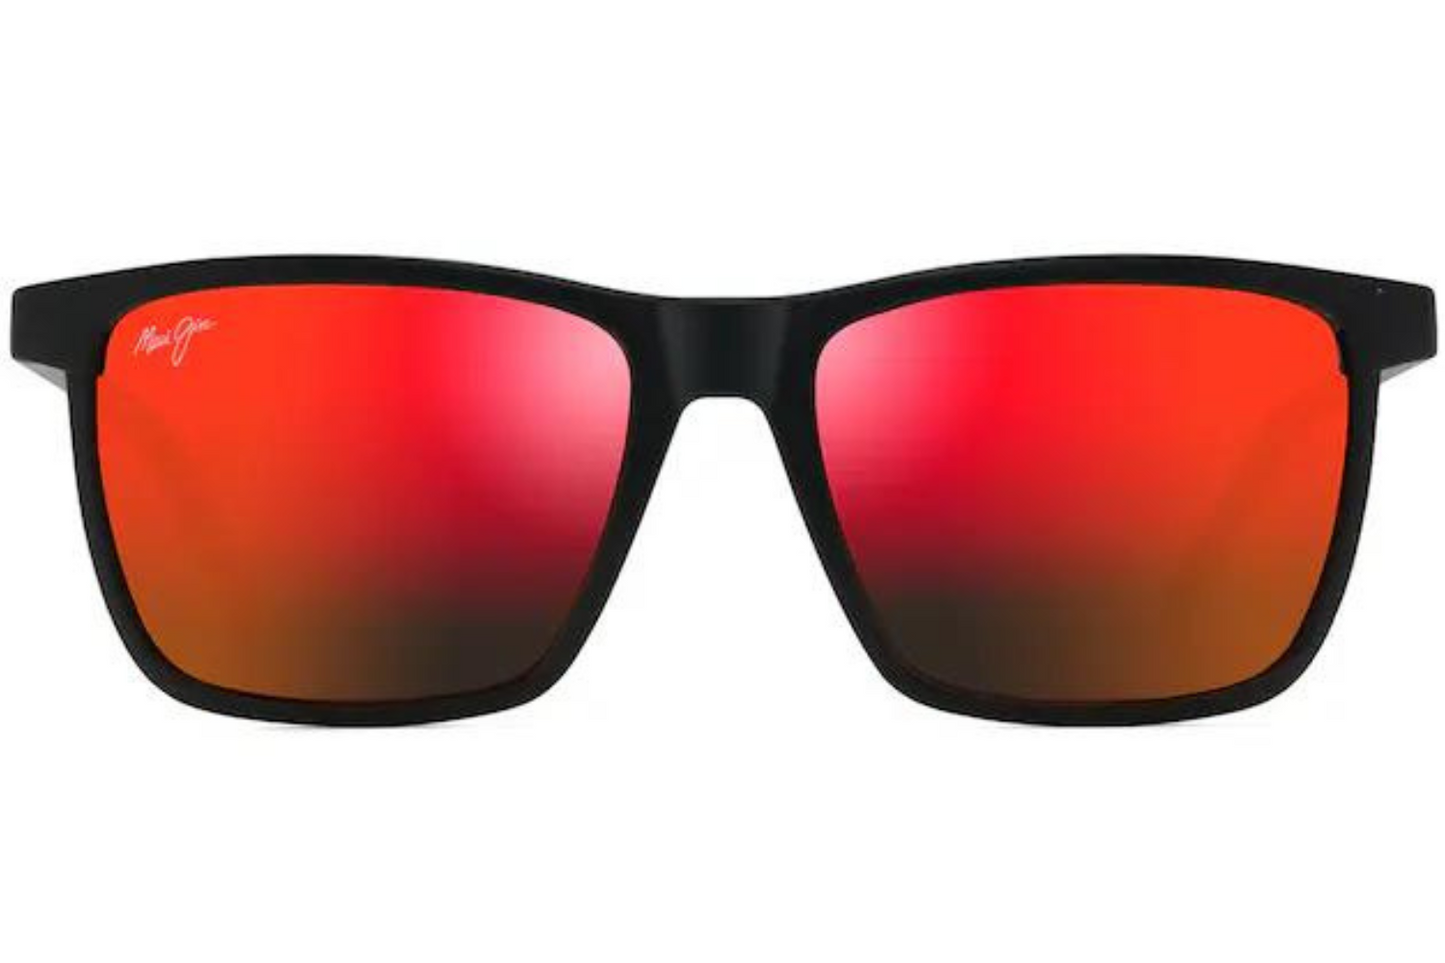 Maui Jim Sunglasses ONE WAY 875 POLARIZED